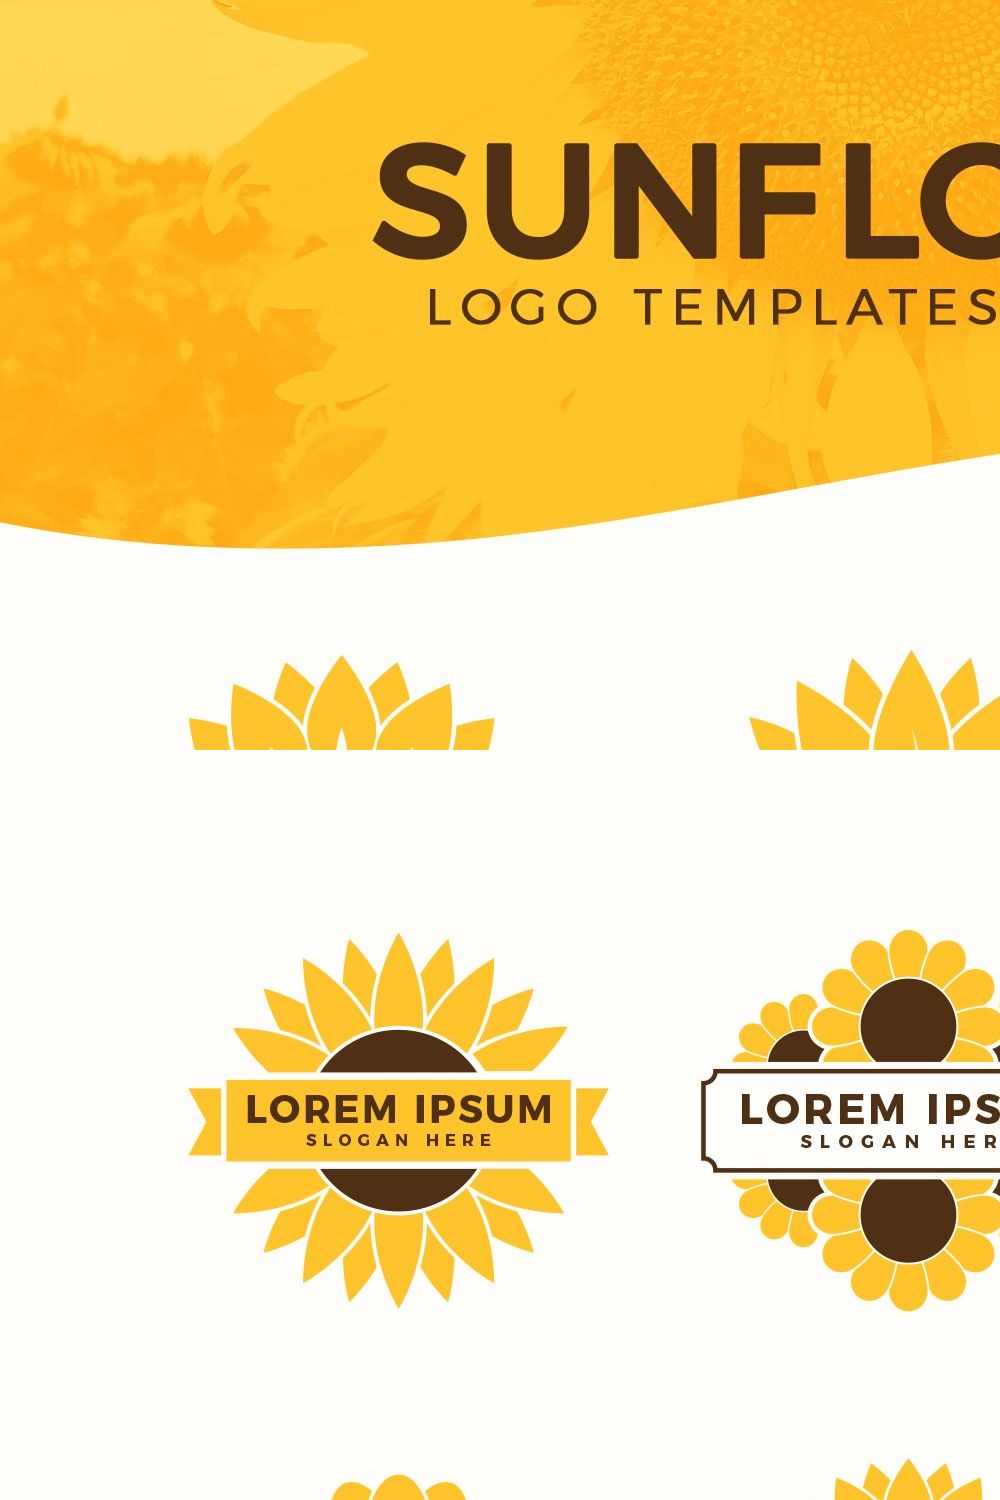 Sunflower Logo Templates & Cliparts pinterest preview image.